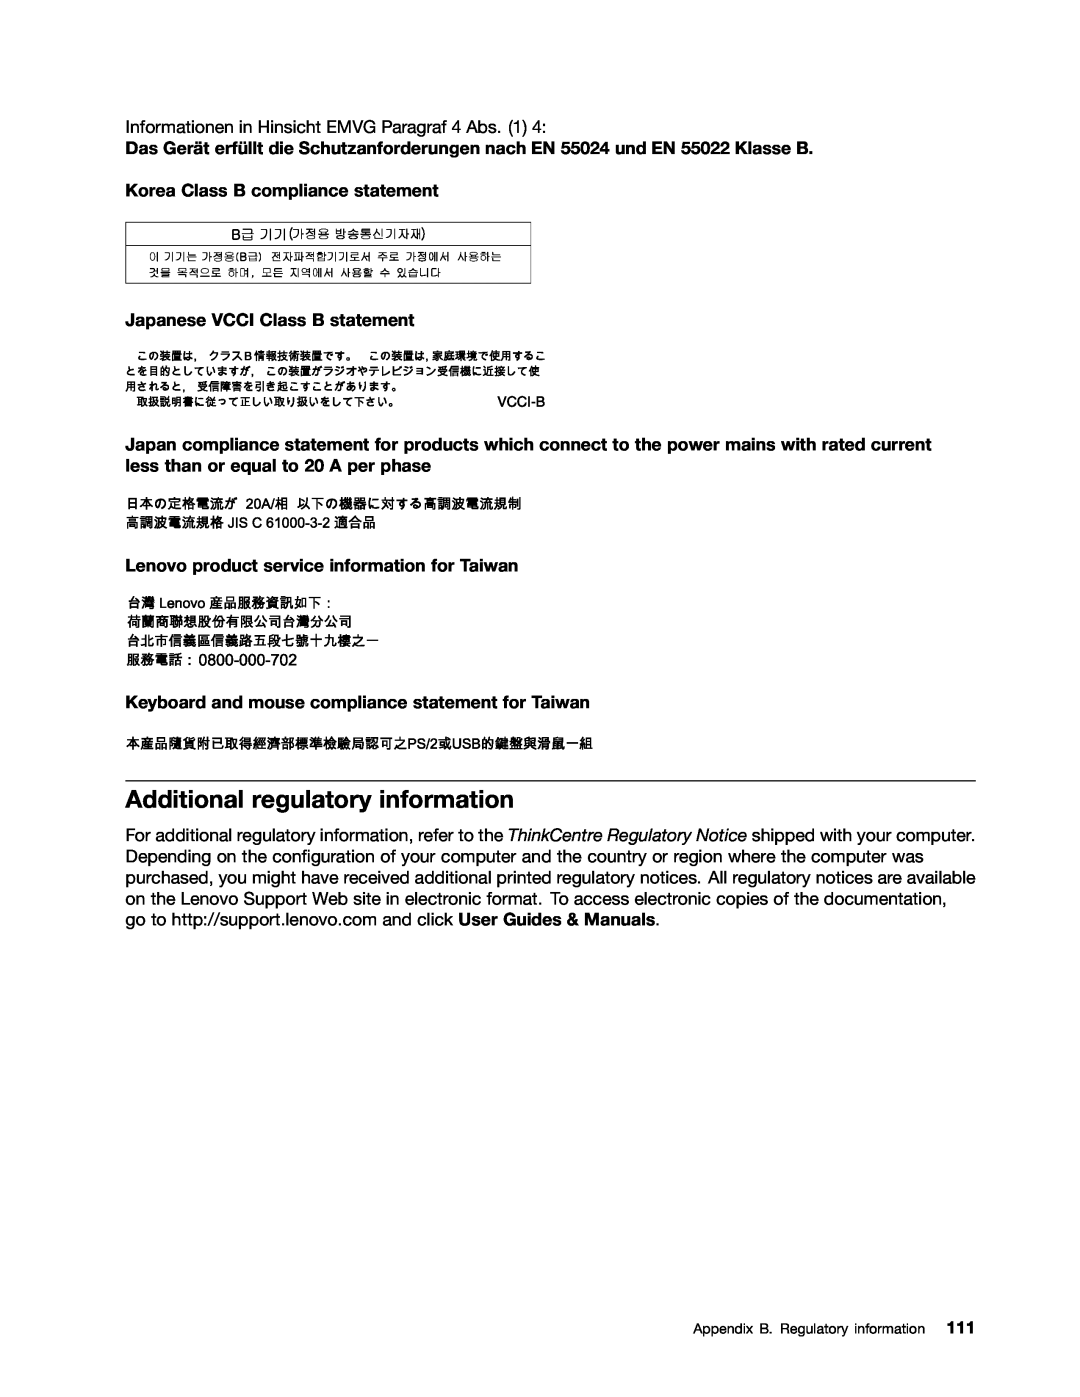 Lenovo 1985, 1993 Additional regulatory information, Korea Class B compliance statement Japanese VCCI Class B statement 